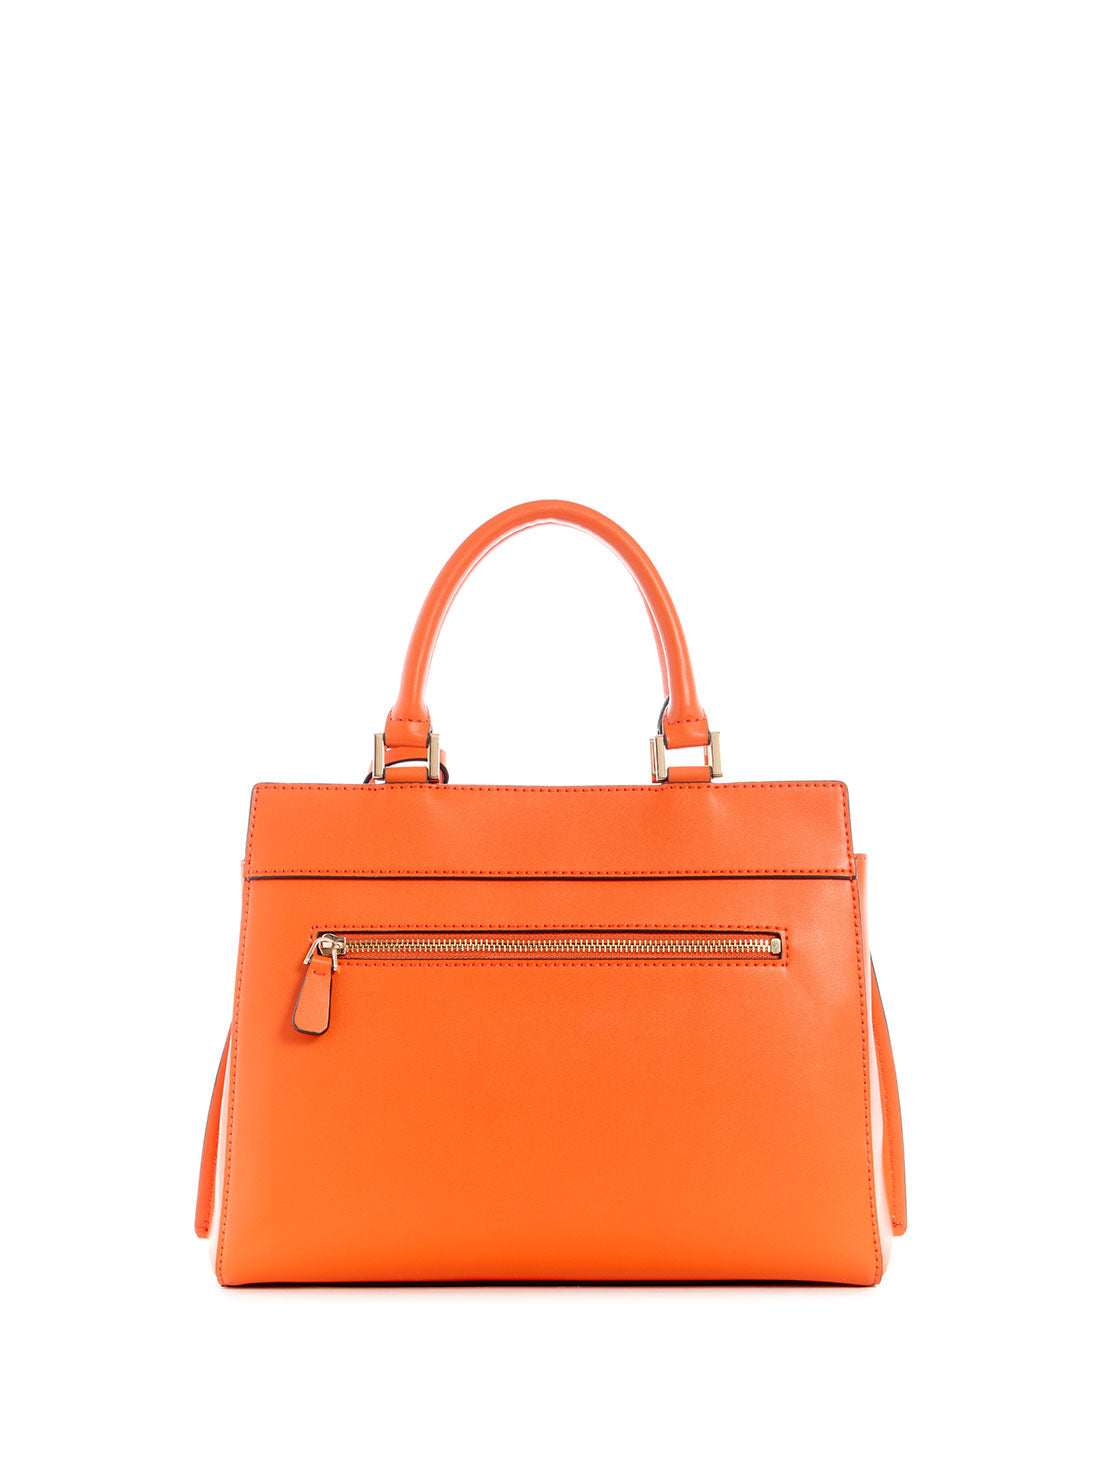 GUESS Women's Orange Katey Luxury Satchel Bag VC787026 Back View